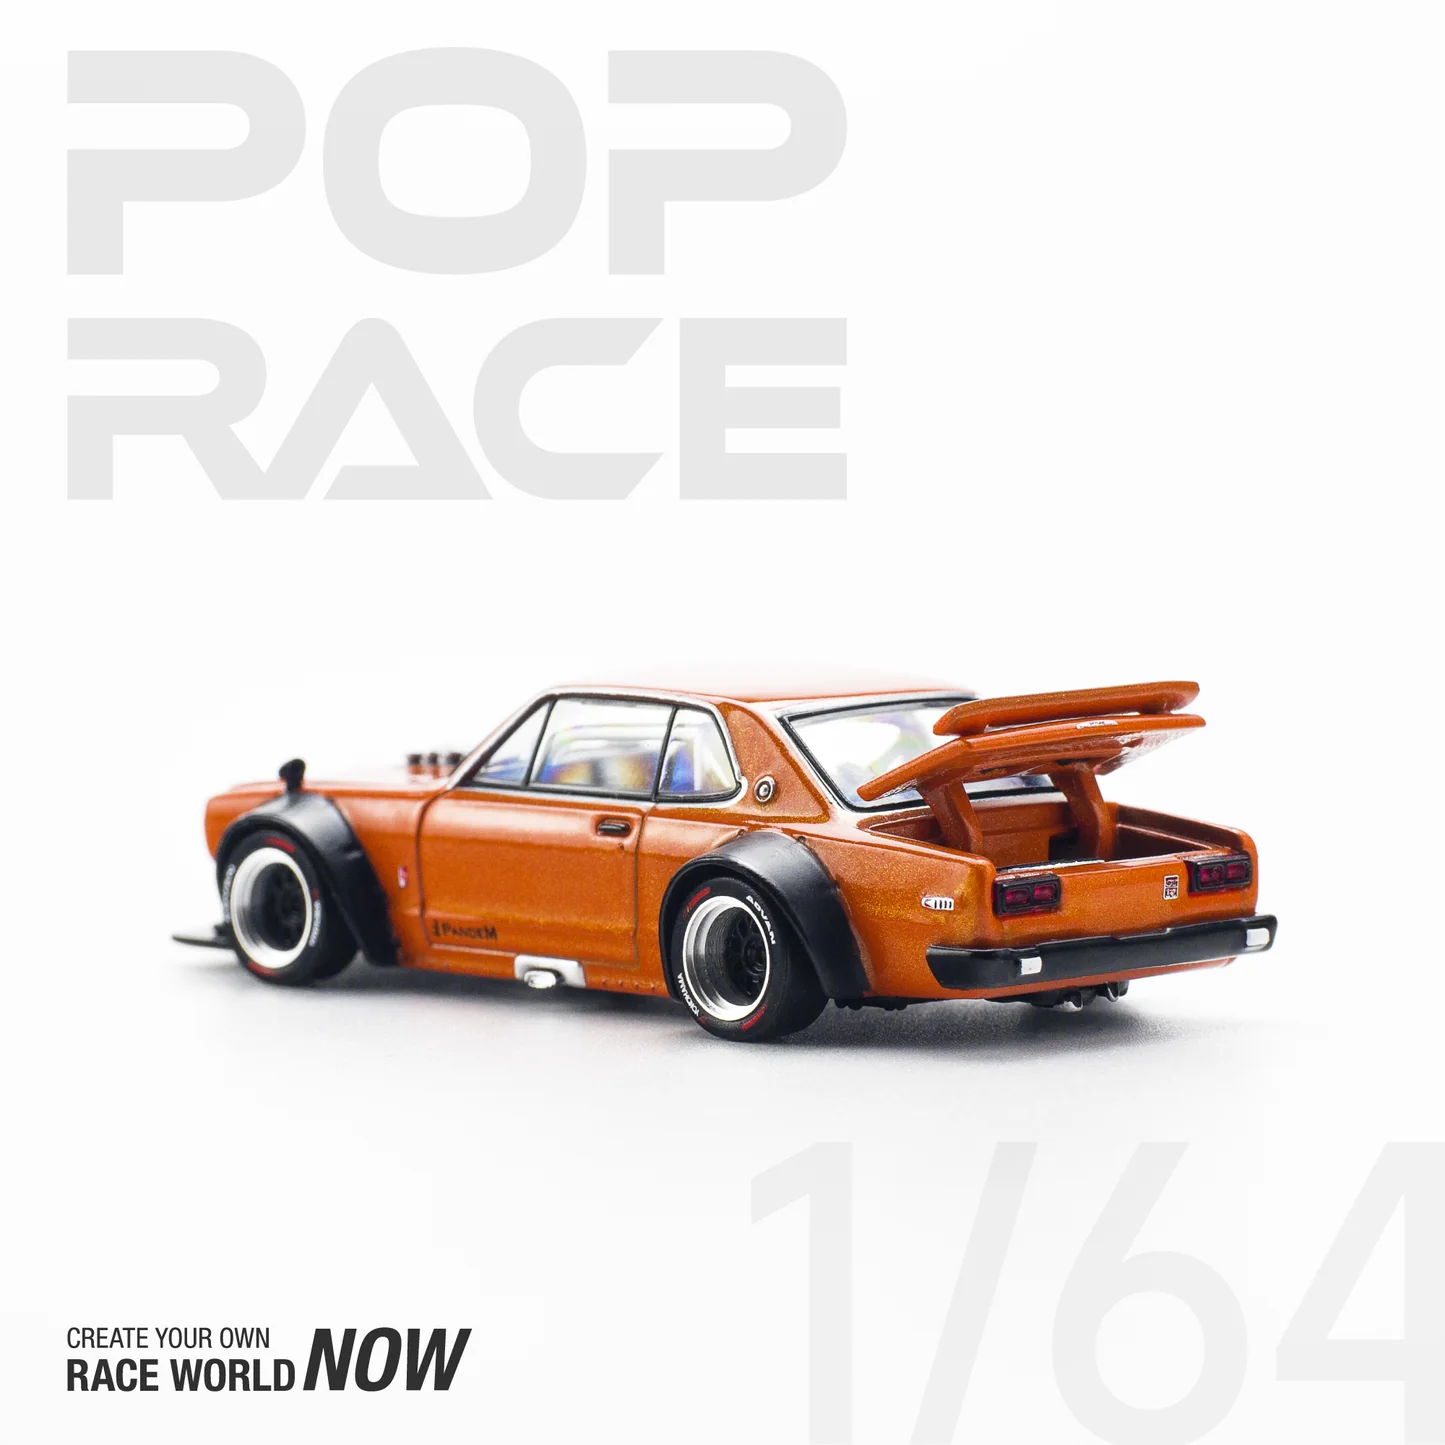 Pop Race PR64-32 Nissan Skyline GT-R V8 Drift (Hakosuka) Orange